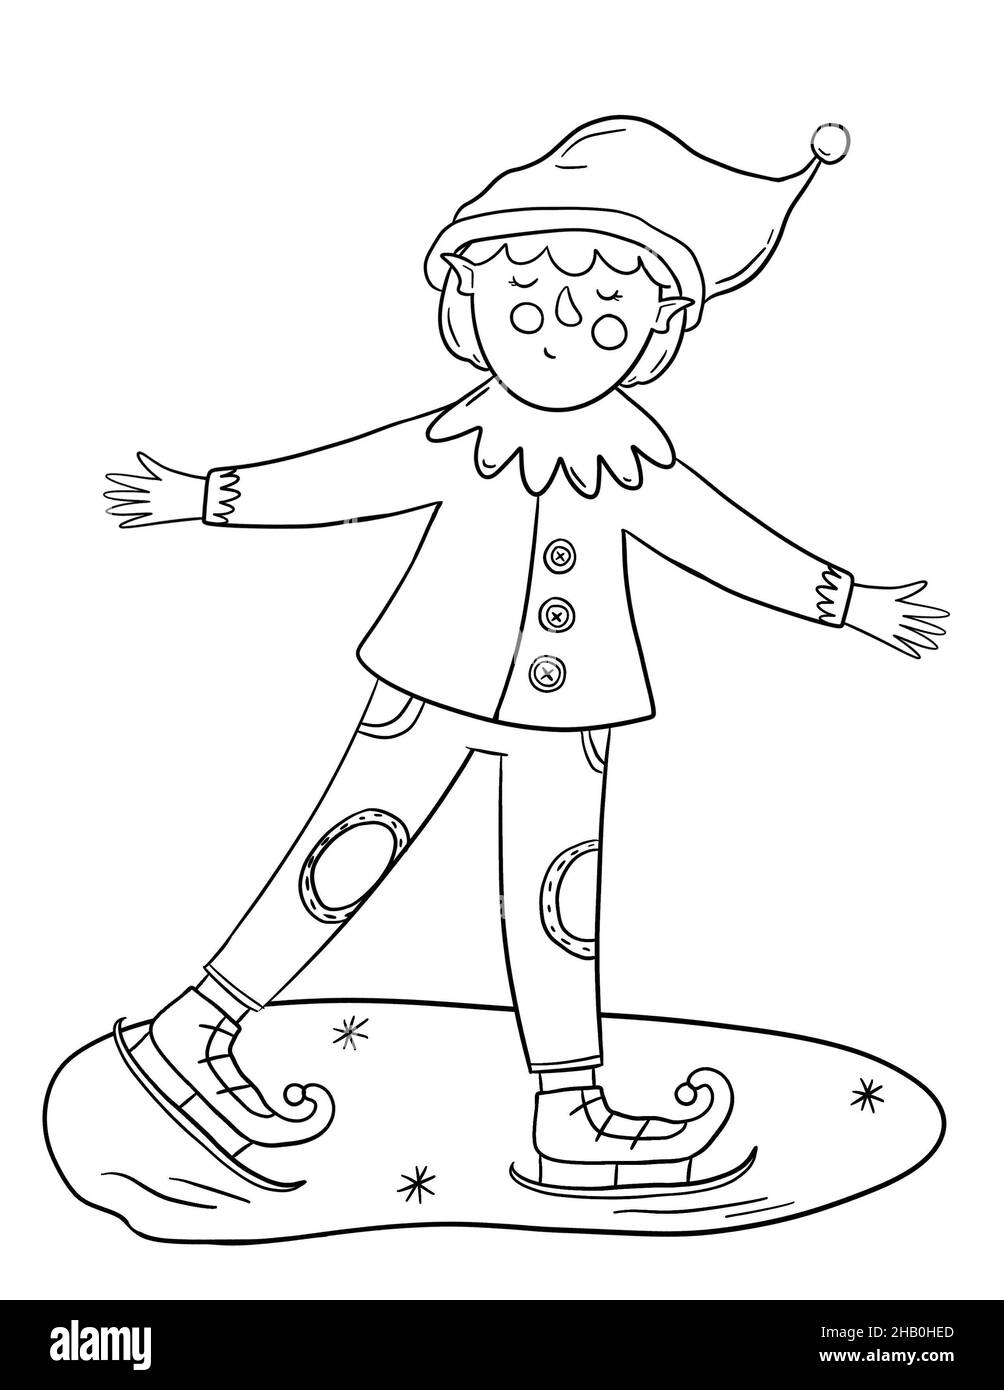 elf-coloring-book-page-outline-elf-illustration-for-kids-stock-photo